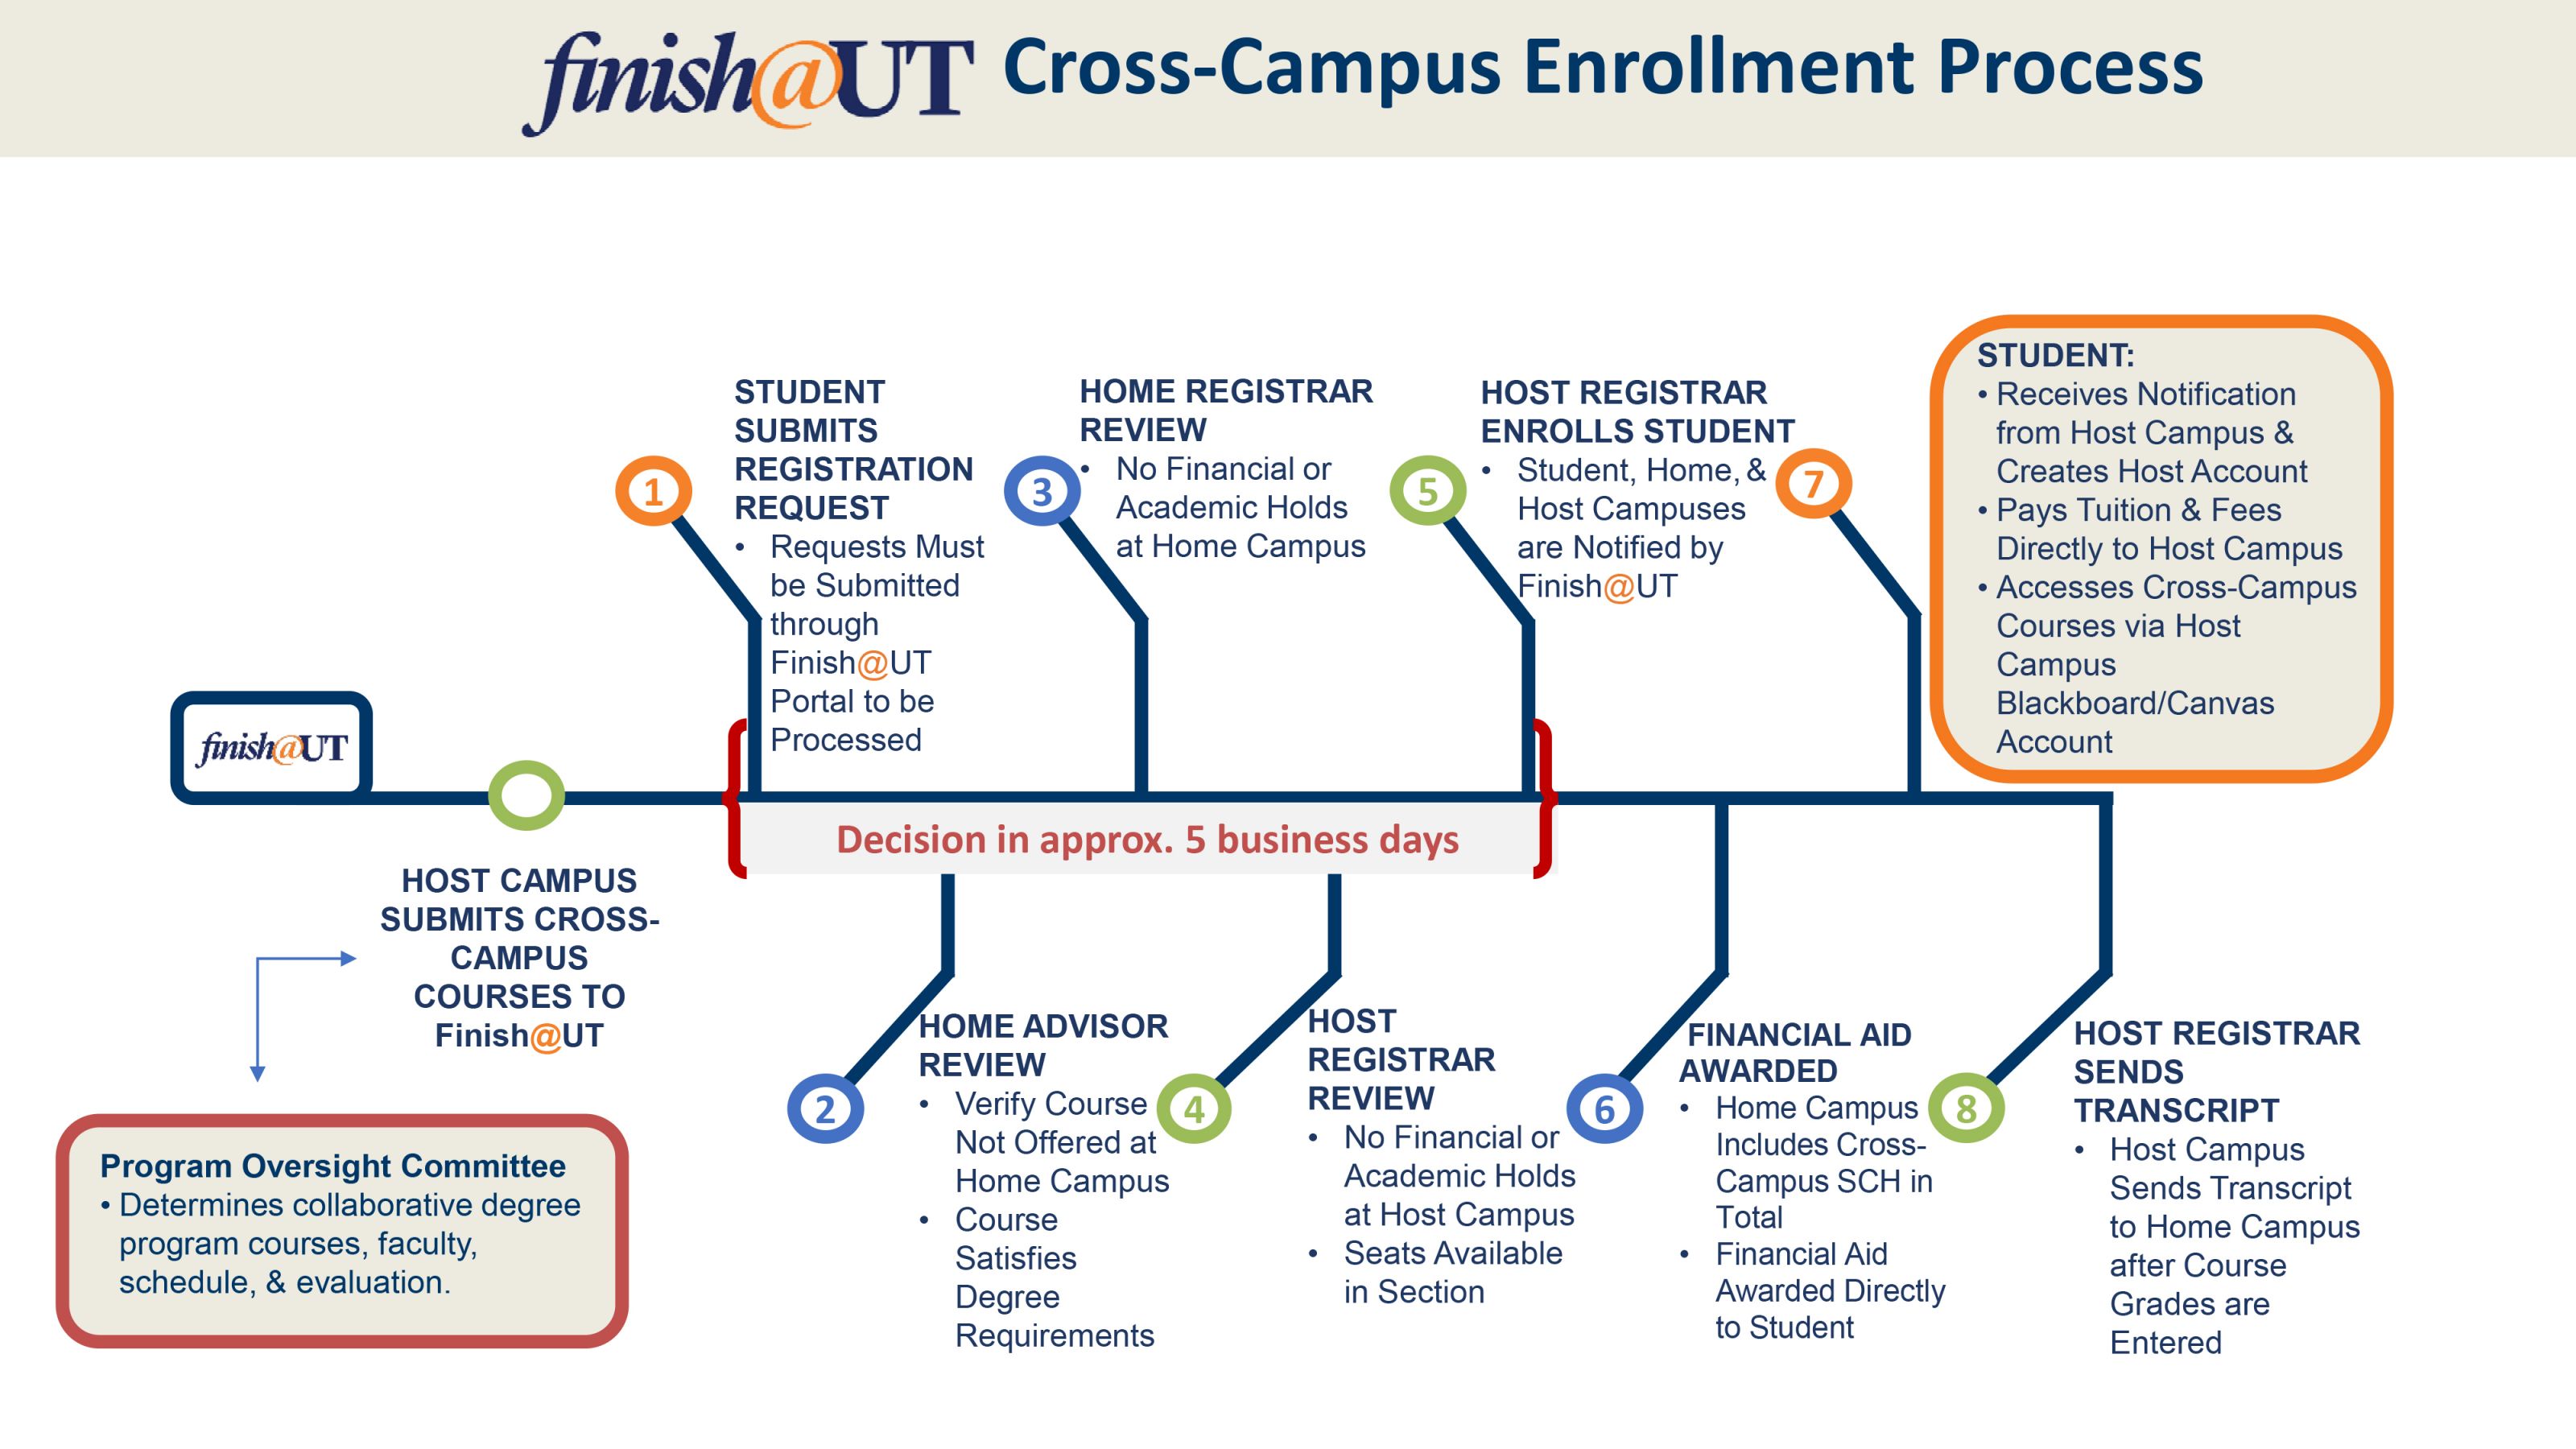 Finish@UT Cross-Campus Enrollment Process Graphic